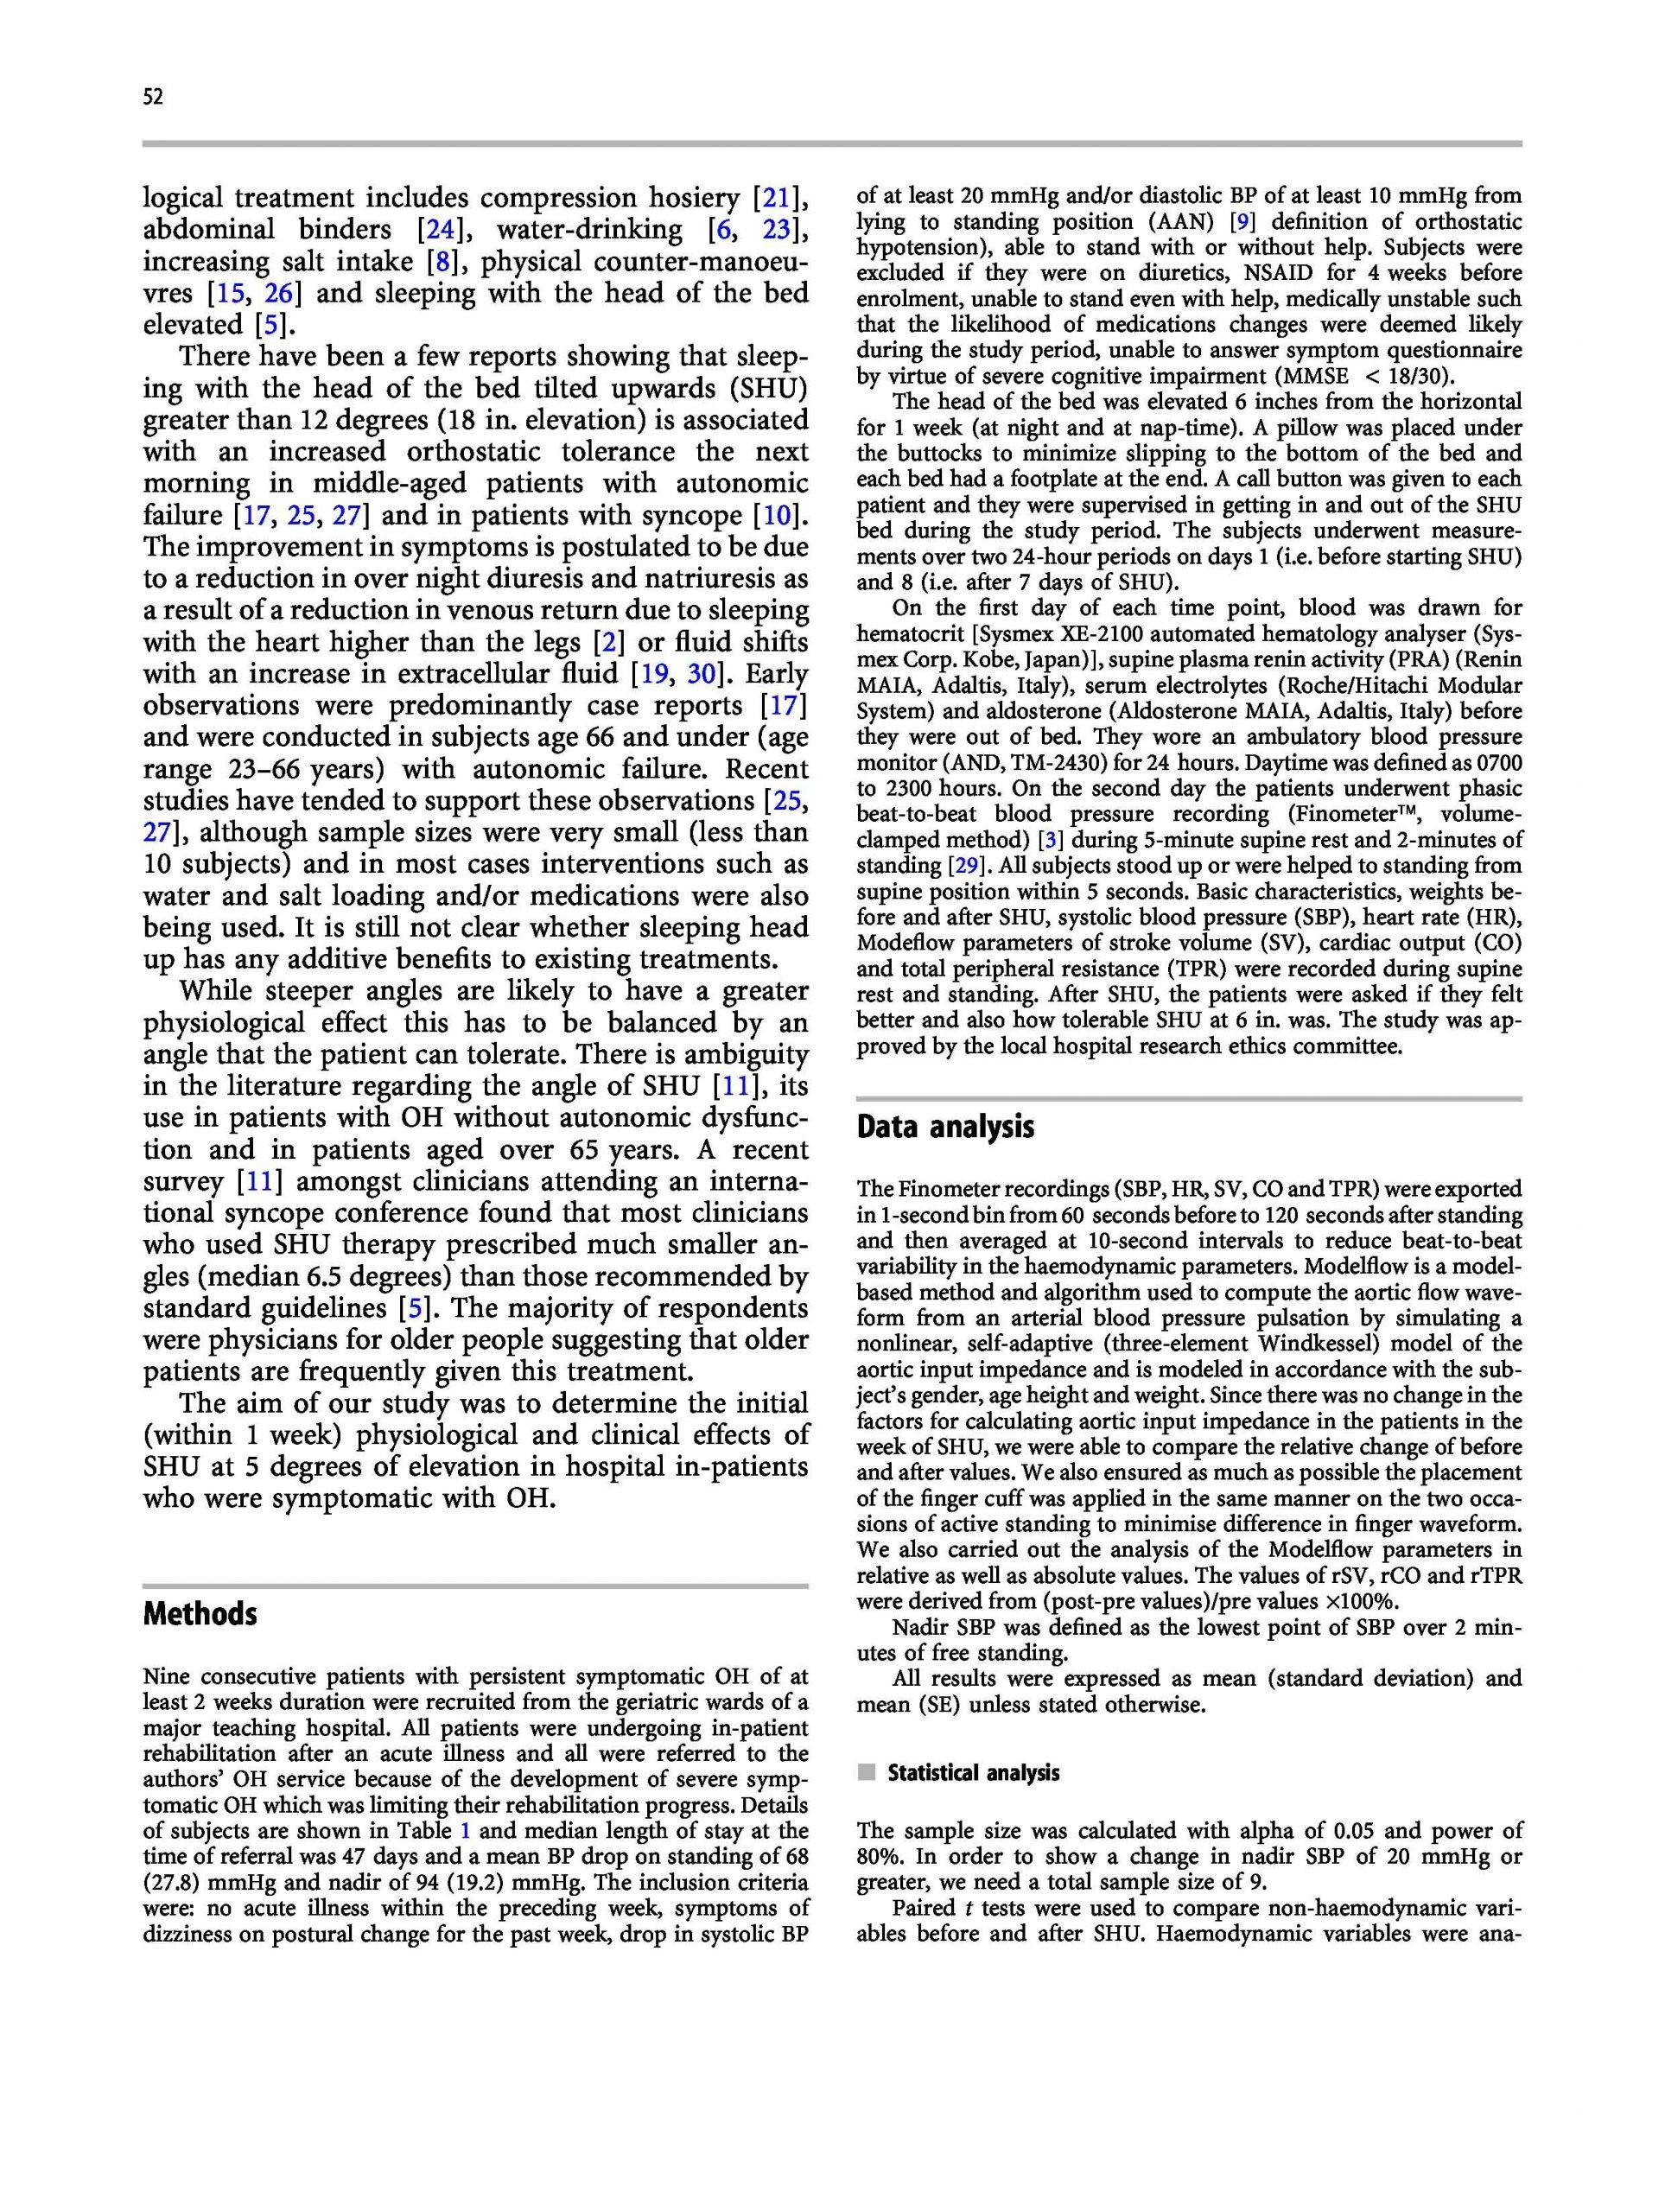 Acute haemodynamic page 1 scaled